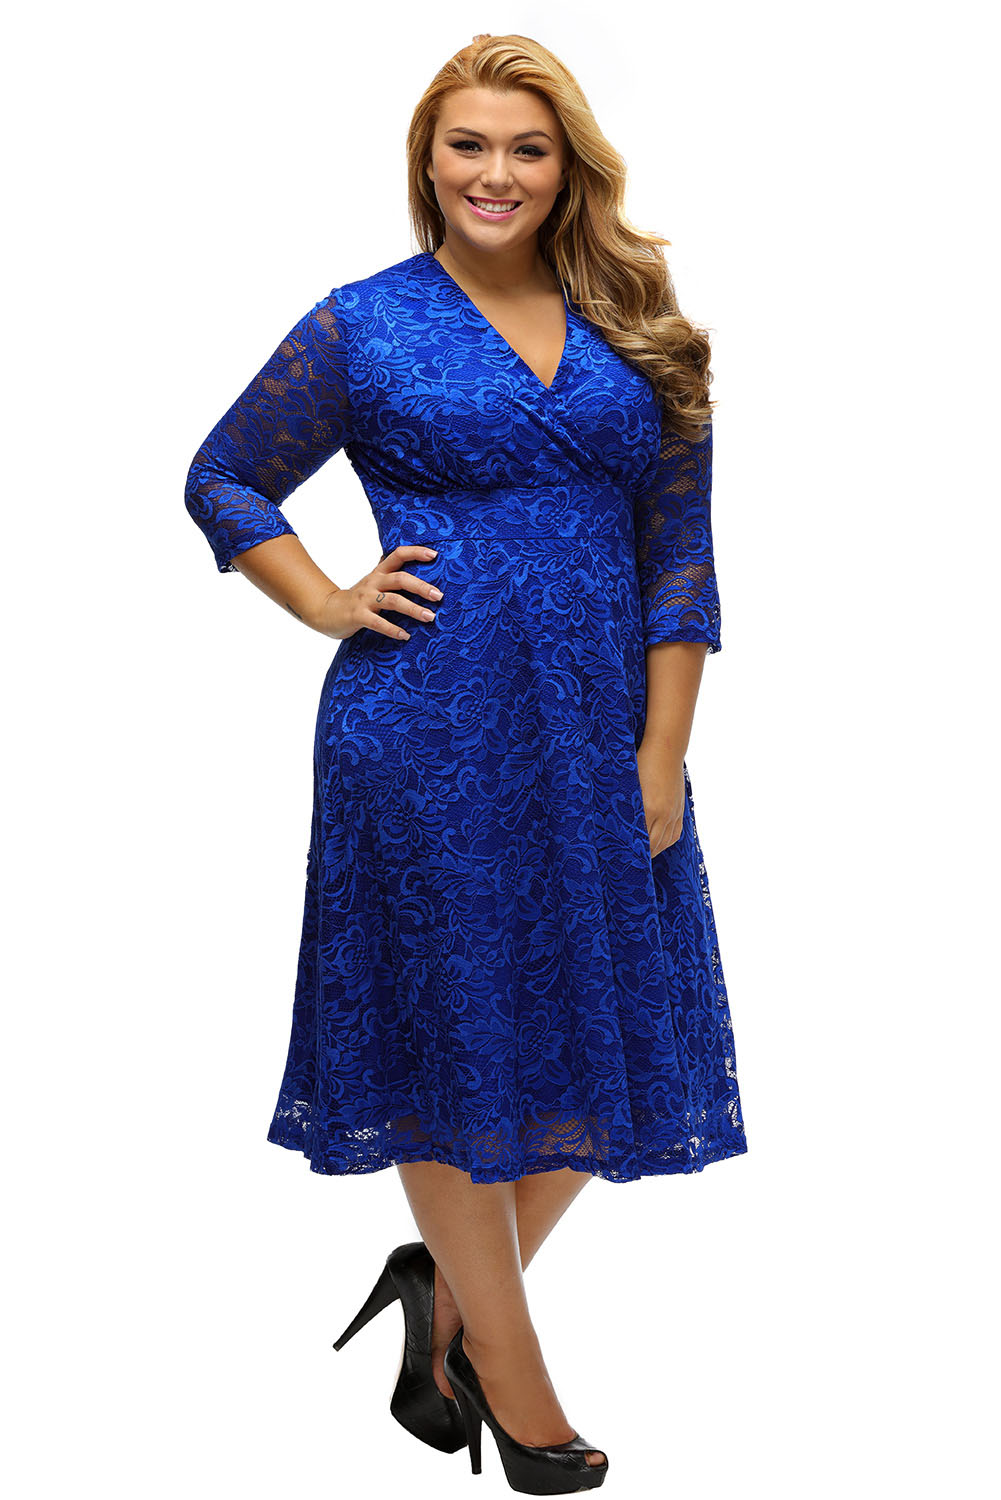 BY61442-4 Blue Plus Size Surplice Lace Formal Skater Dress